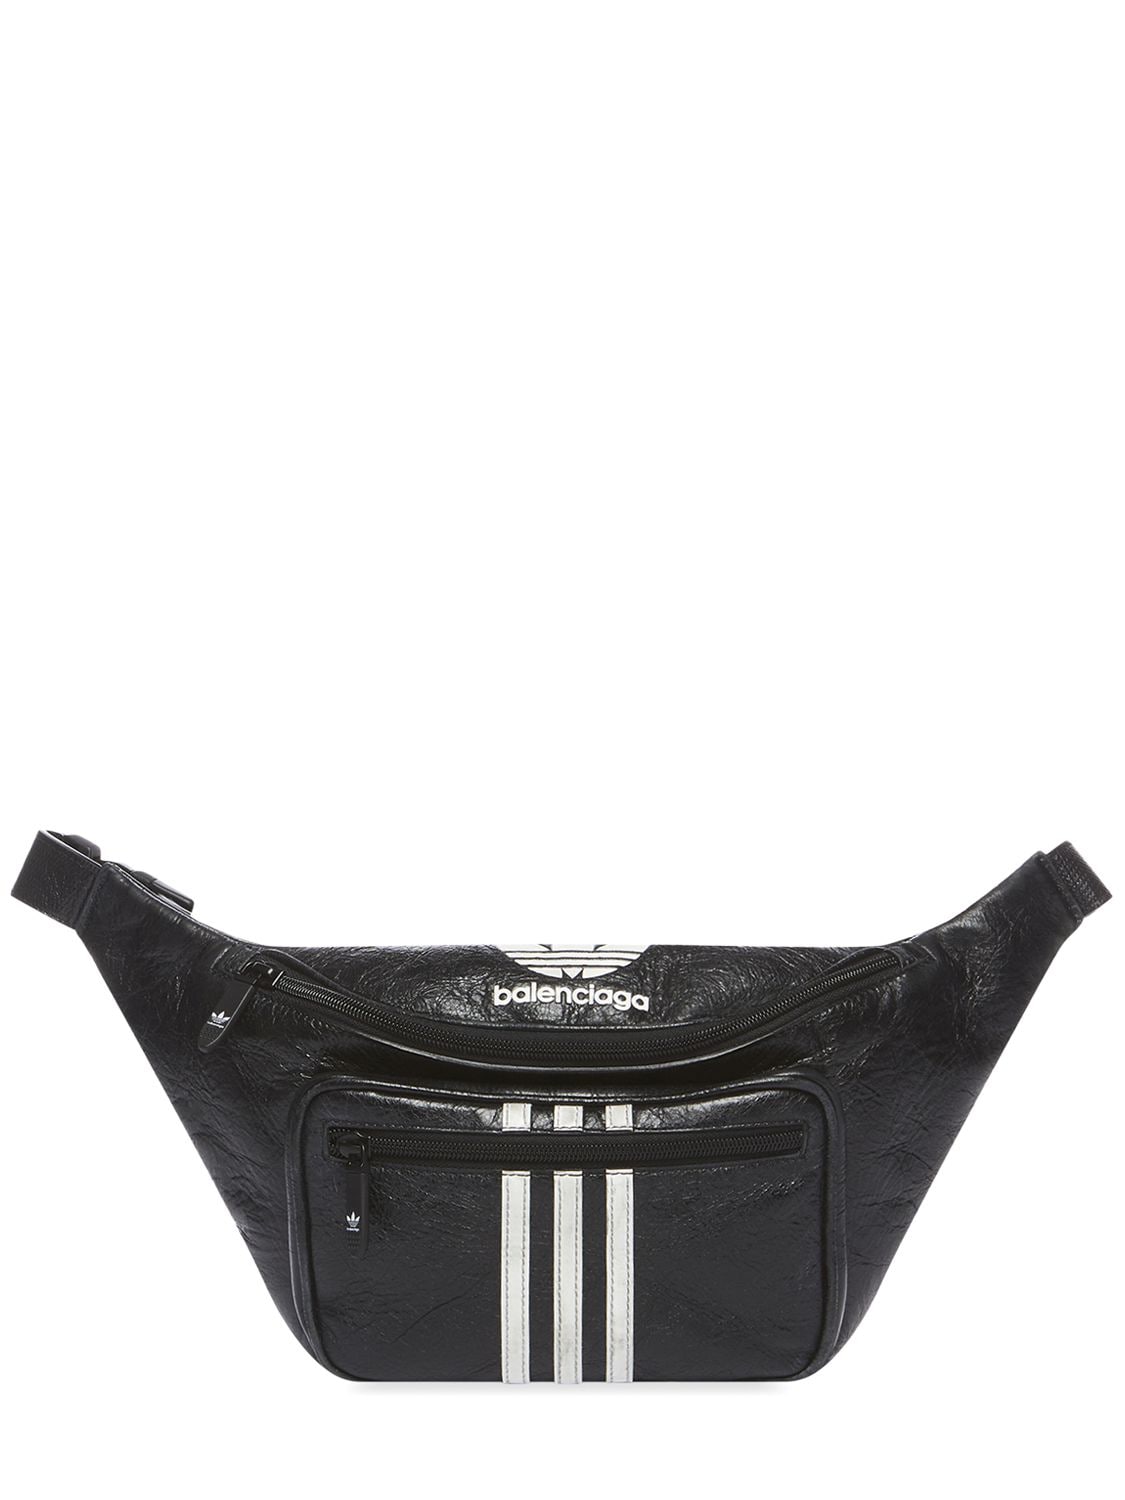 Image of Adidas Belt Bag